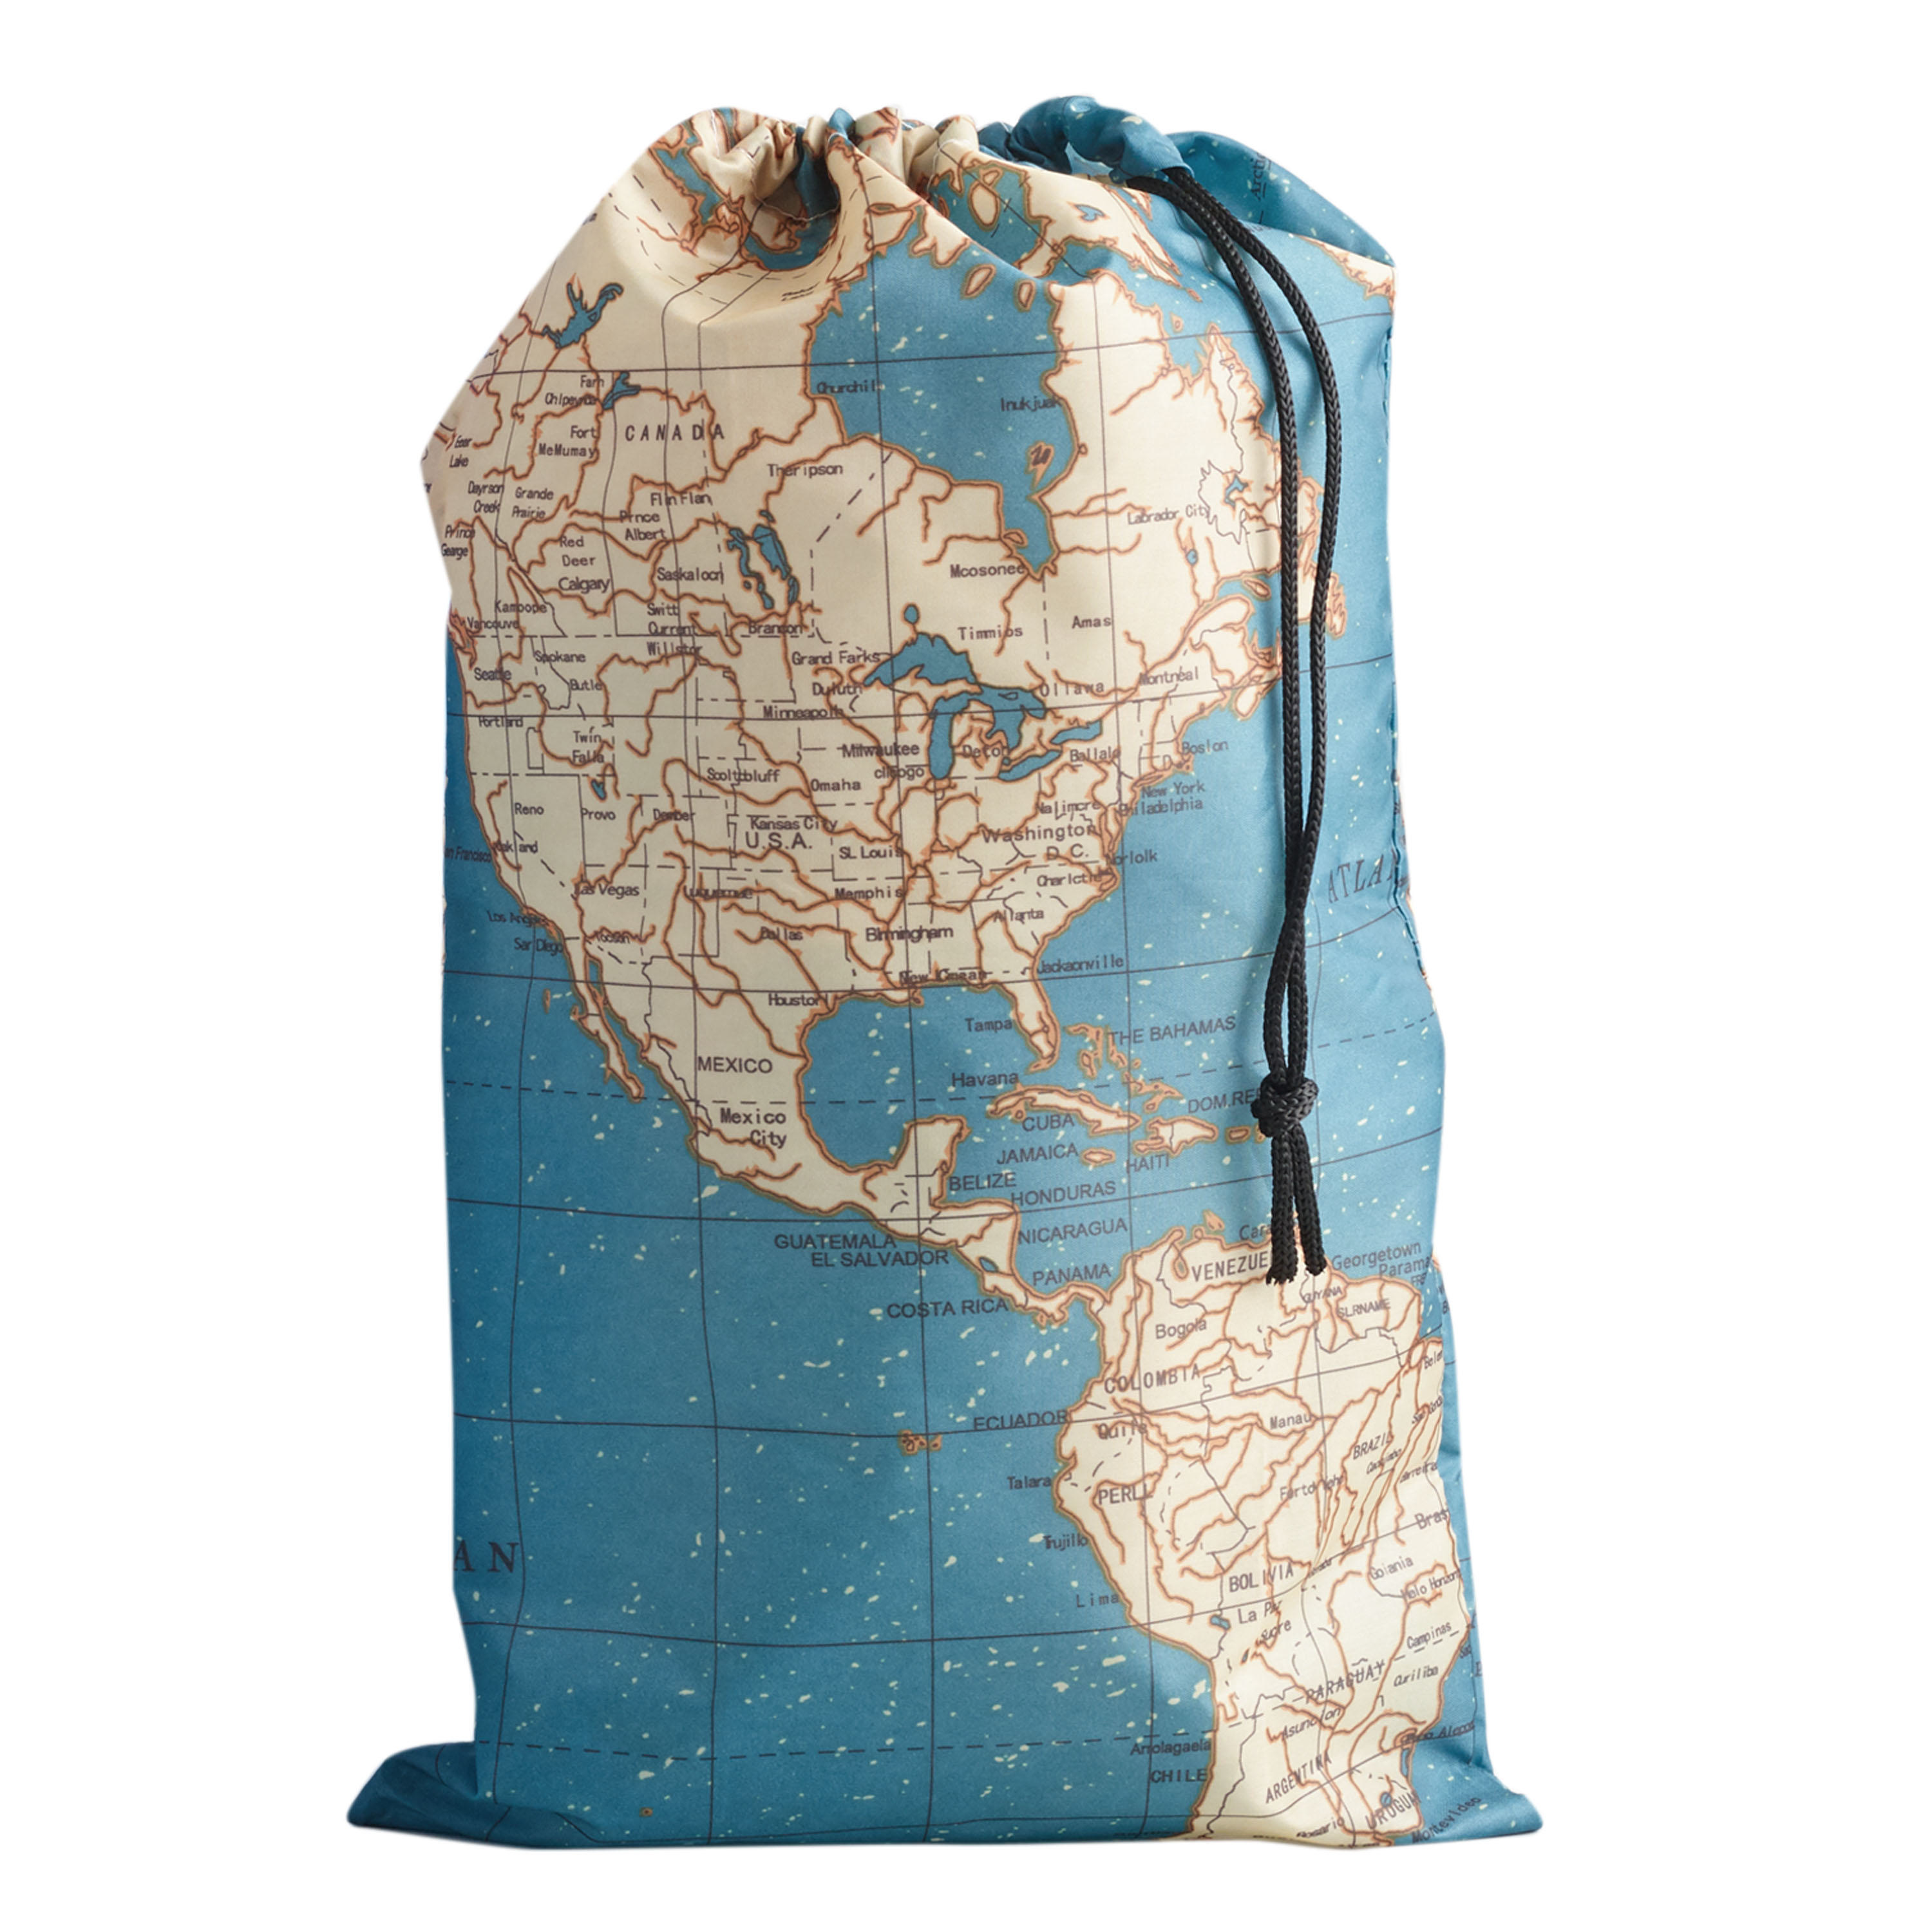 around the world travel bags